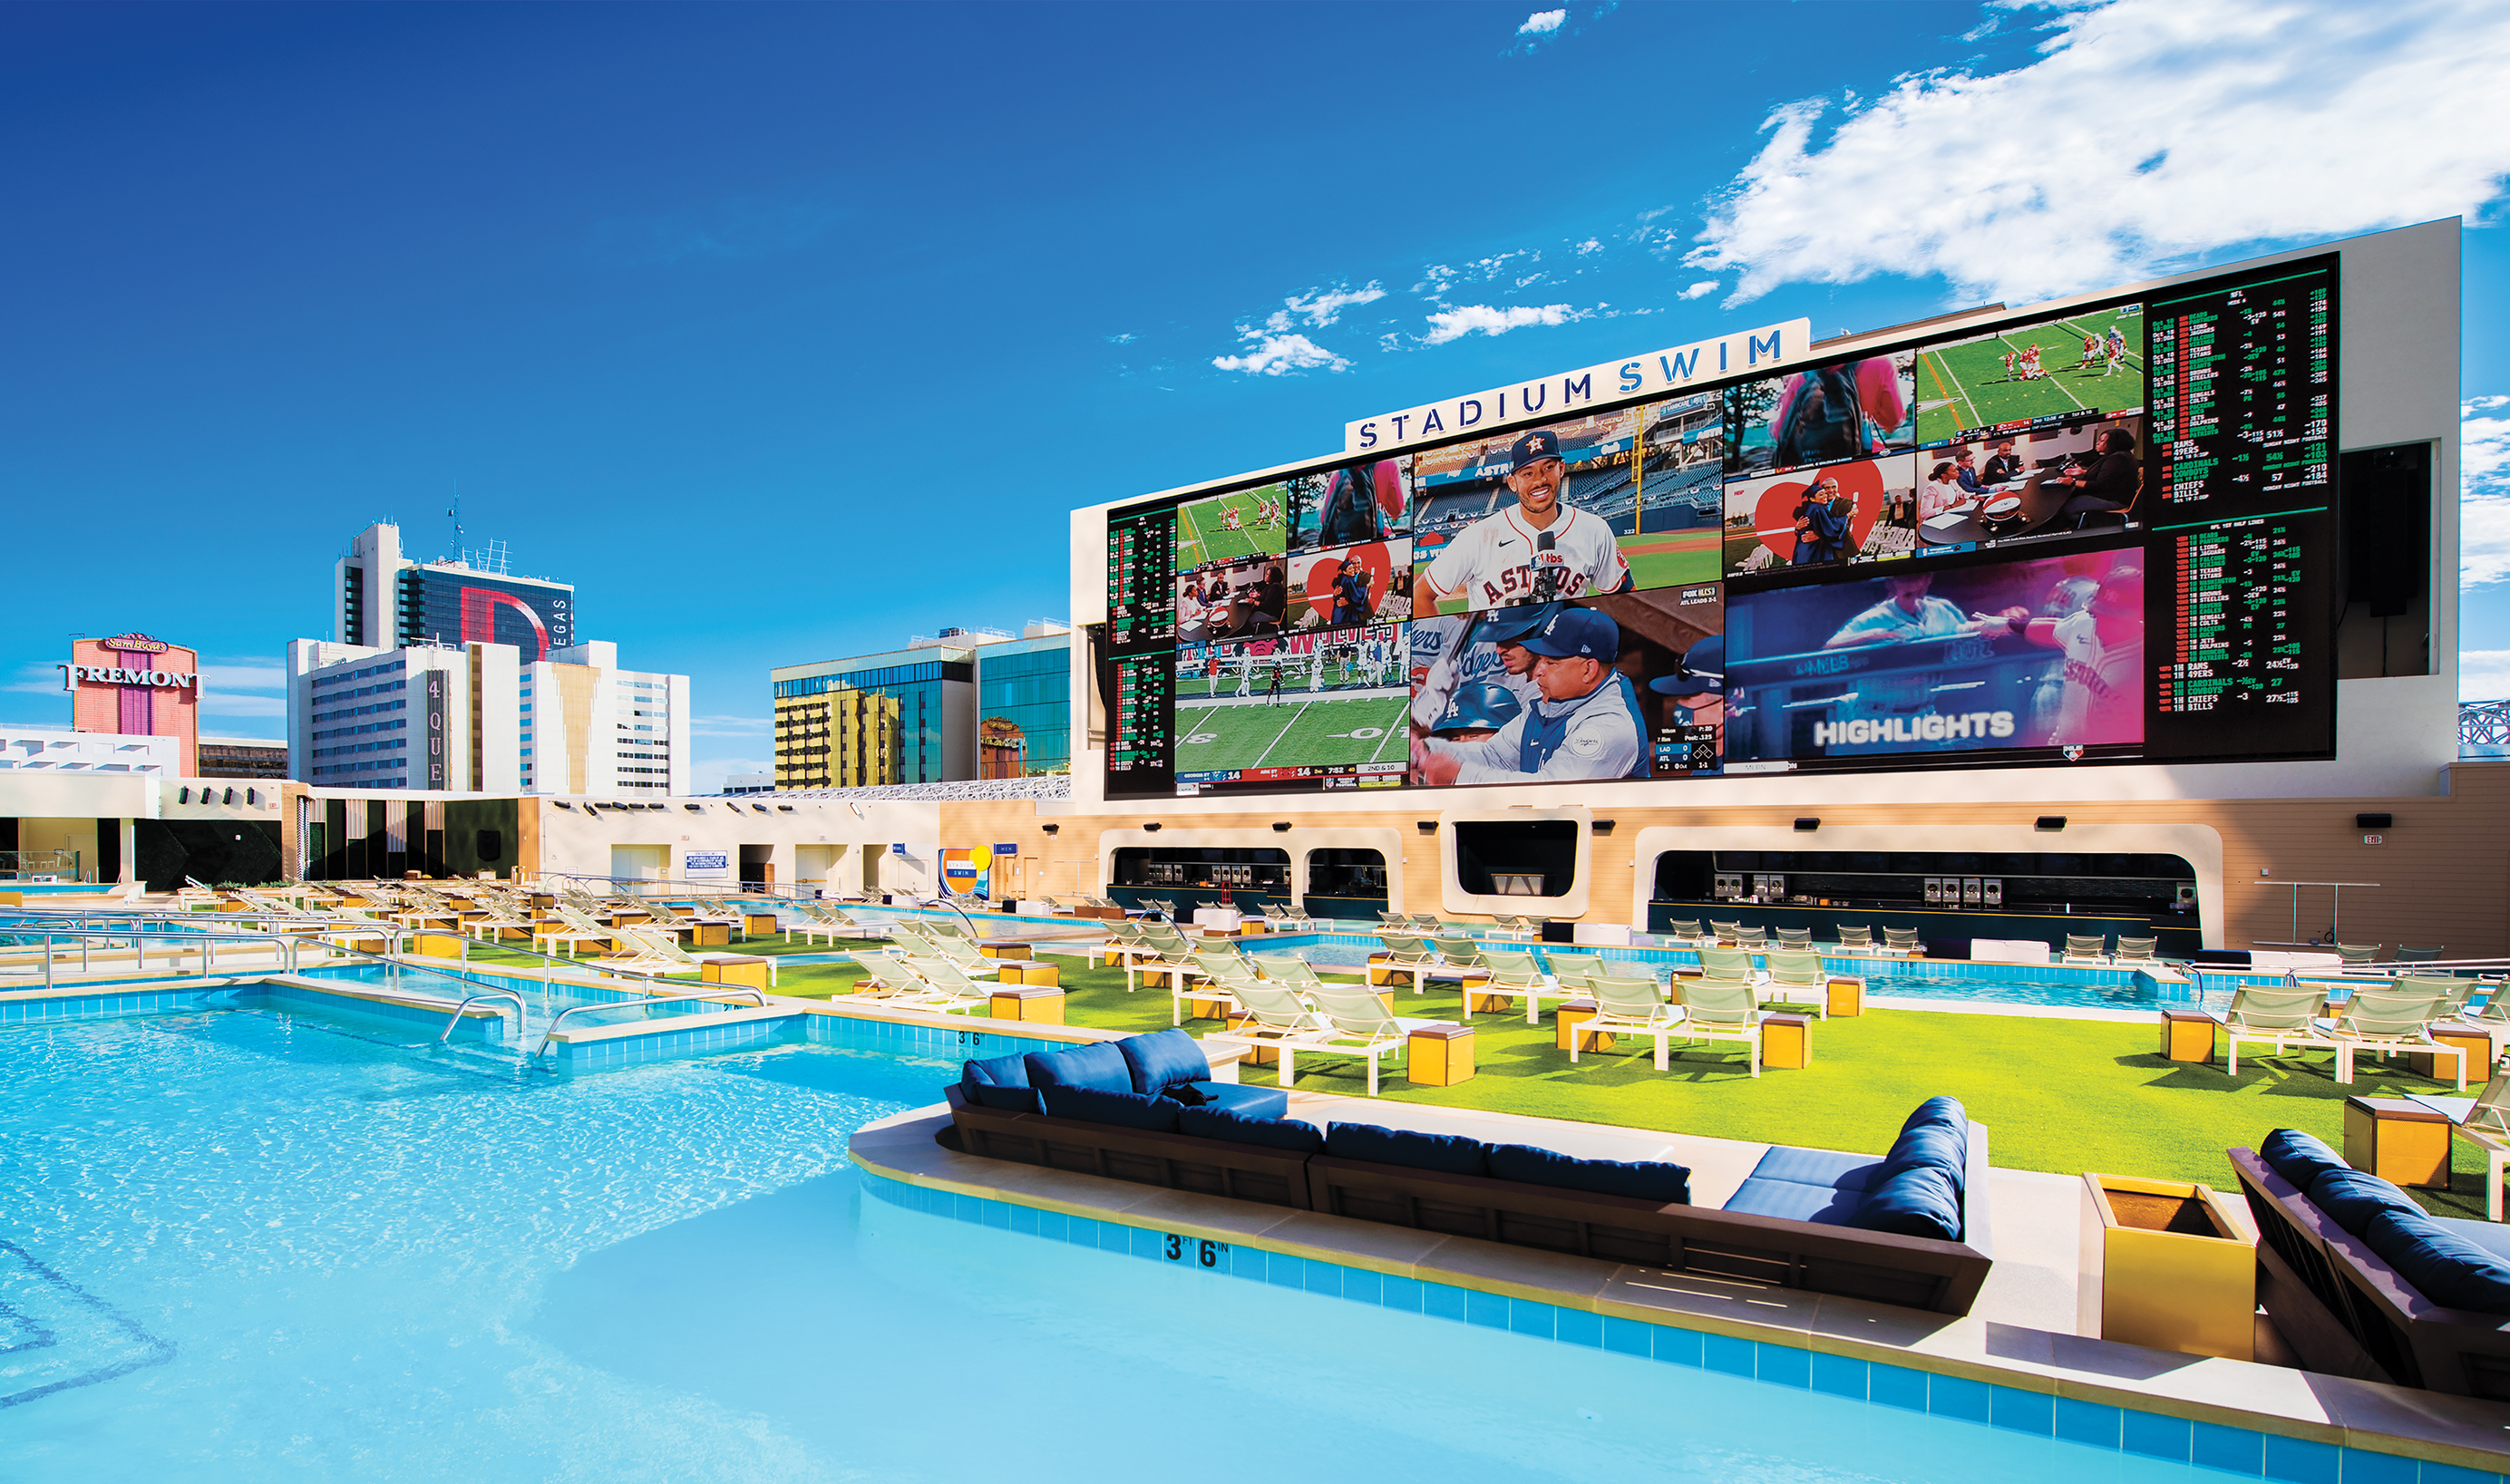 Circa's Stadium Swim brings a winning party vibe to Downtown Las Vegas -  Las Vegas Weekly